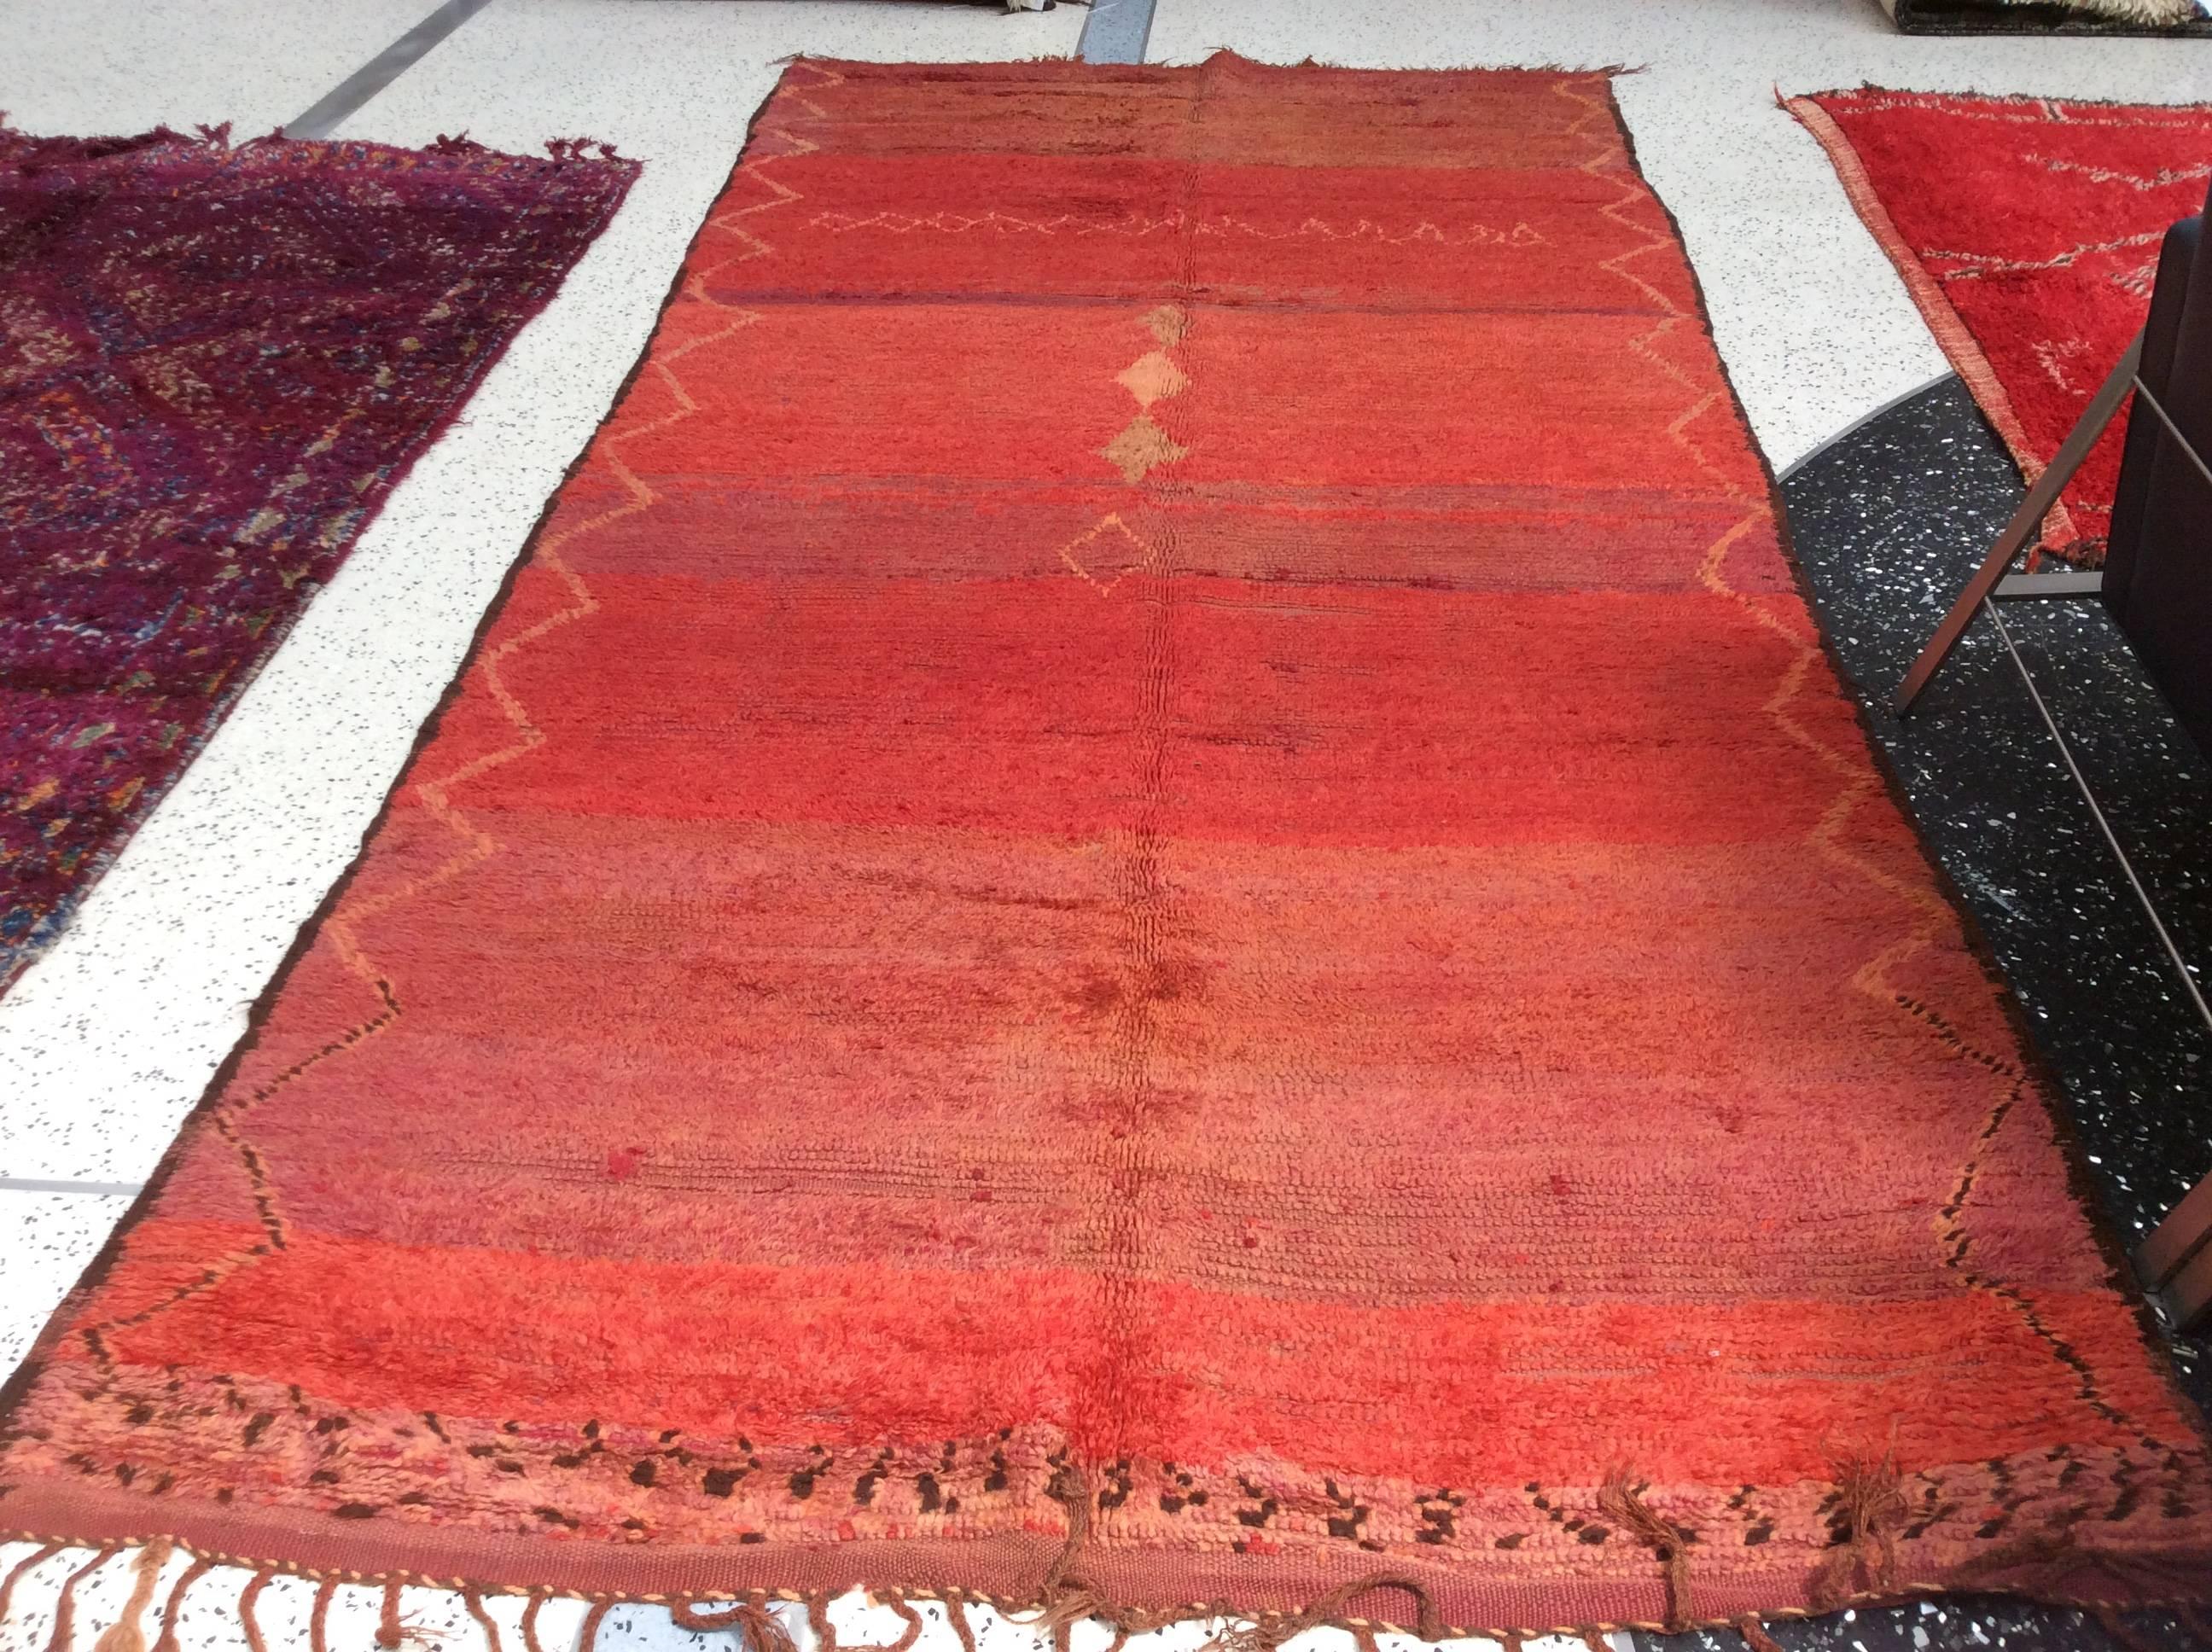 Vintage red Moroccan rug.